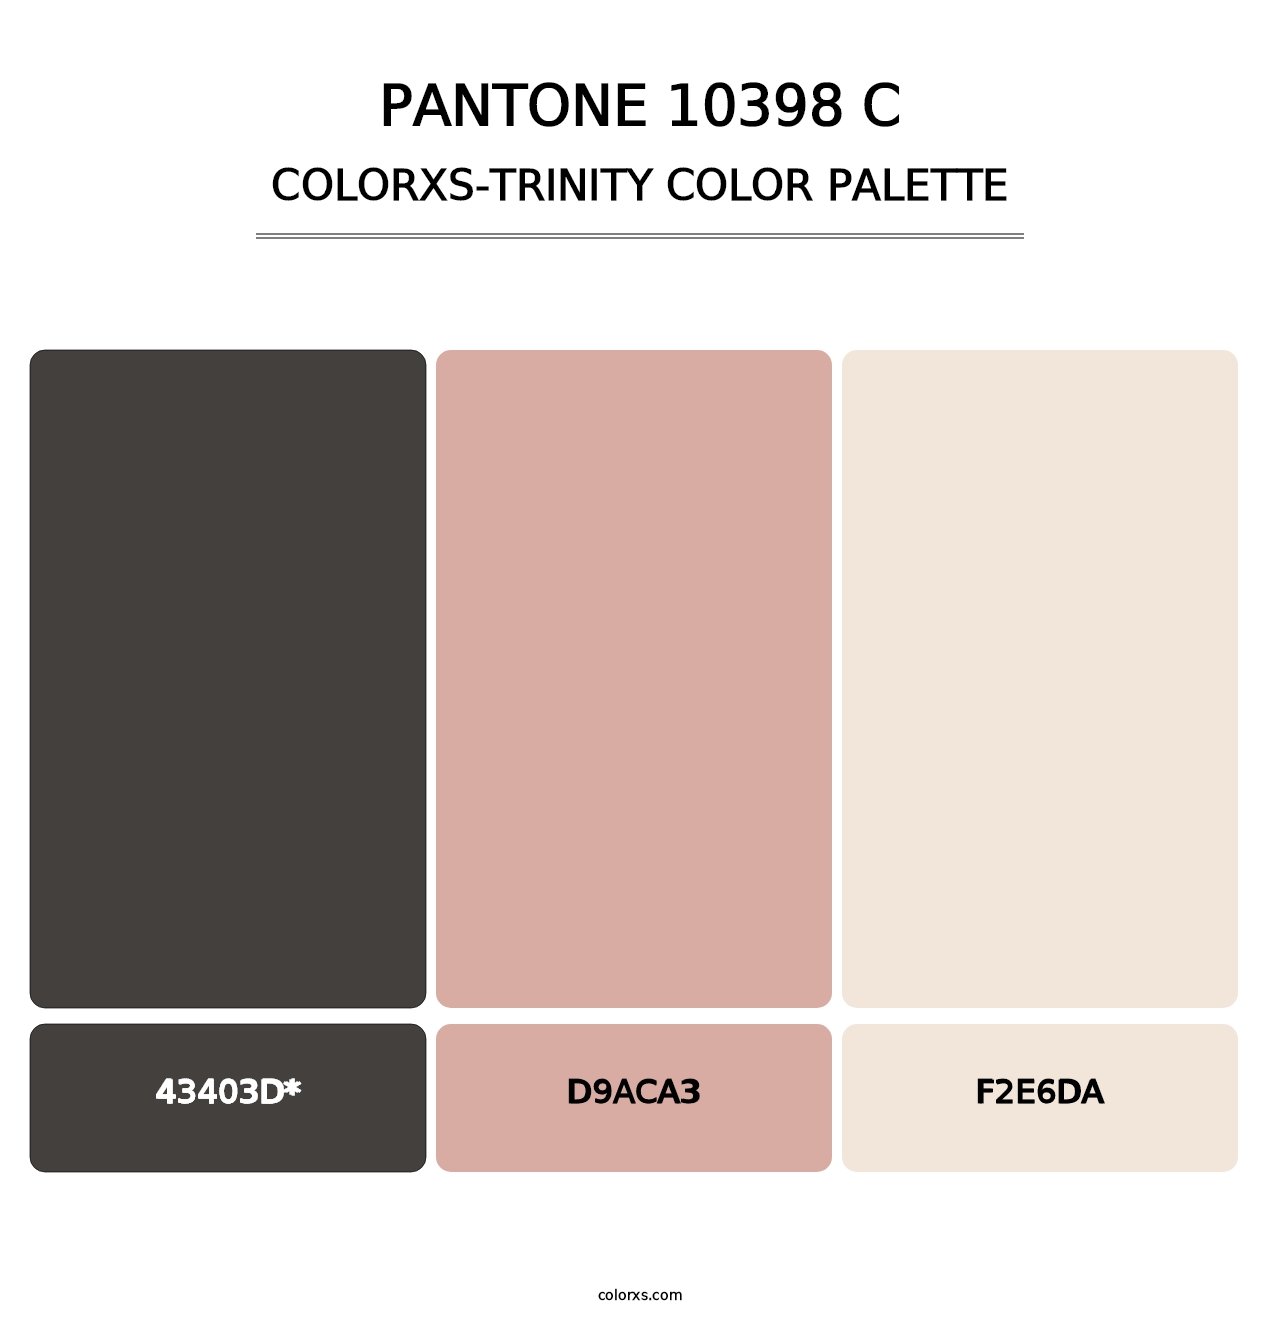 PANTONE 10398 C - Colorxs Trinity Palette